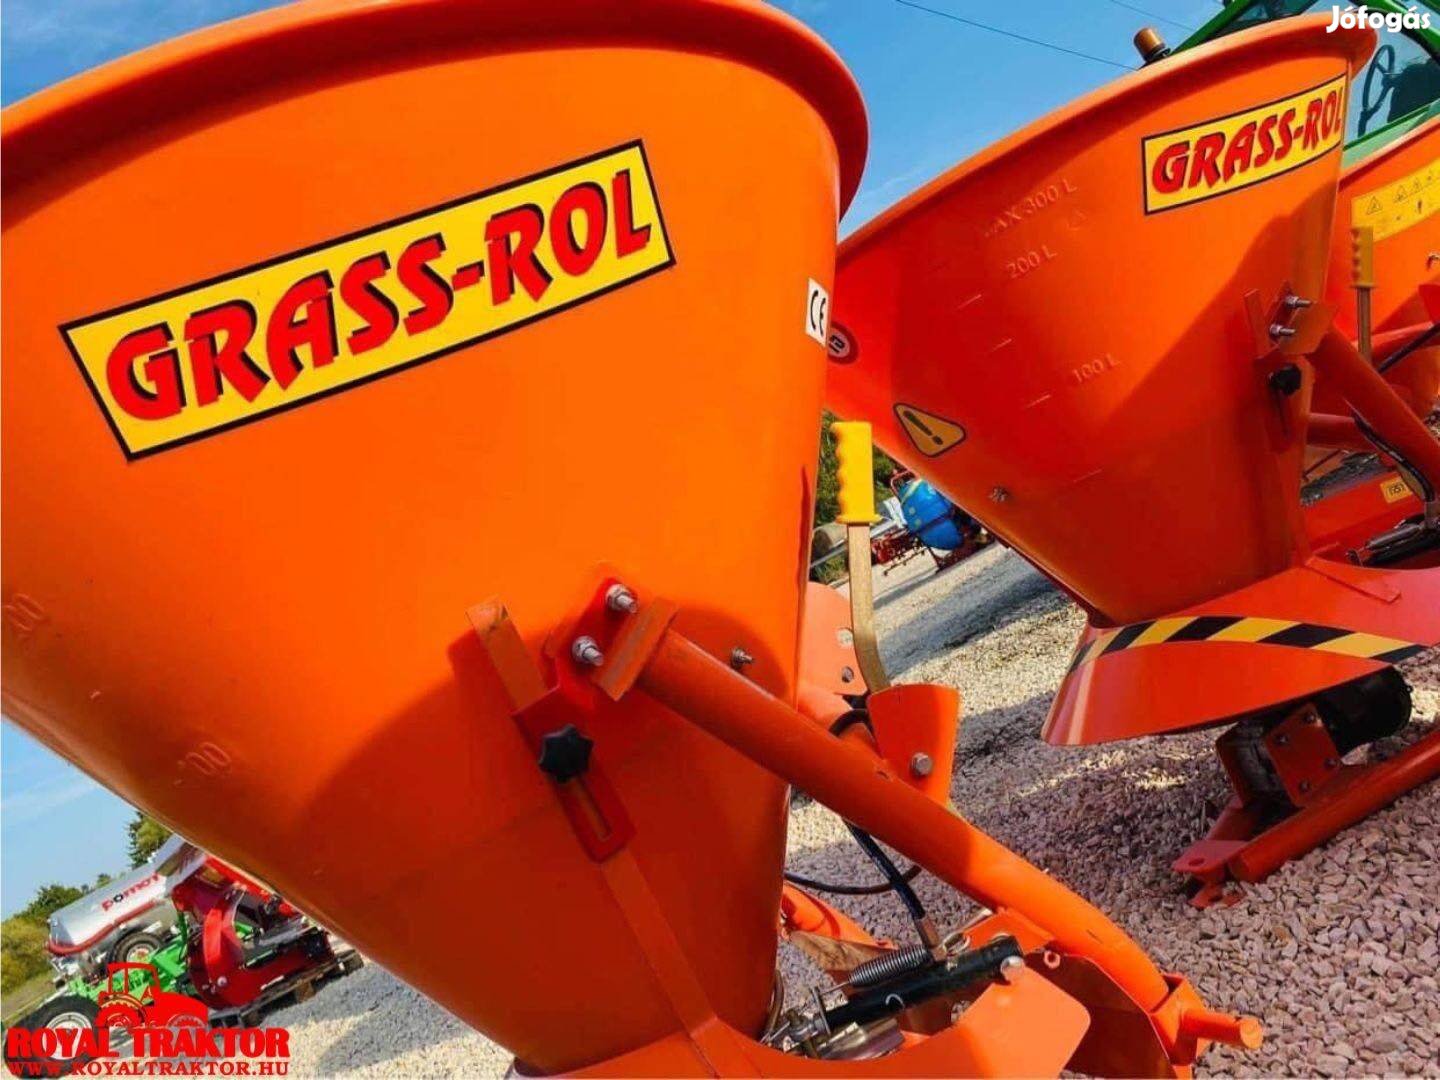 Grass-ROL 200 - 300 - 400 - 500L műtrágyaszórók